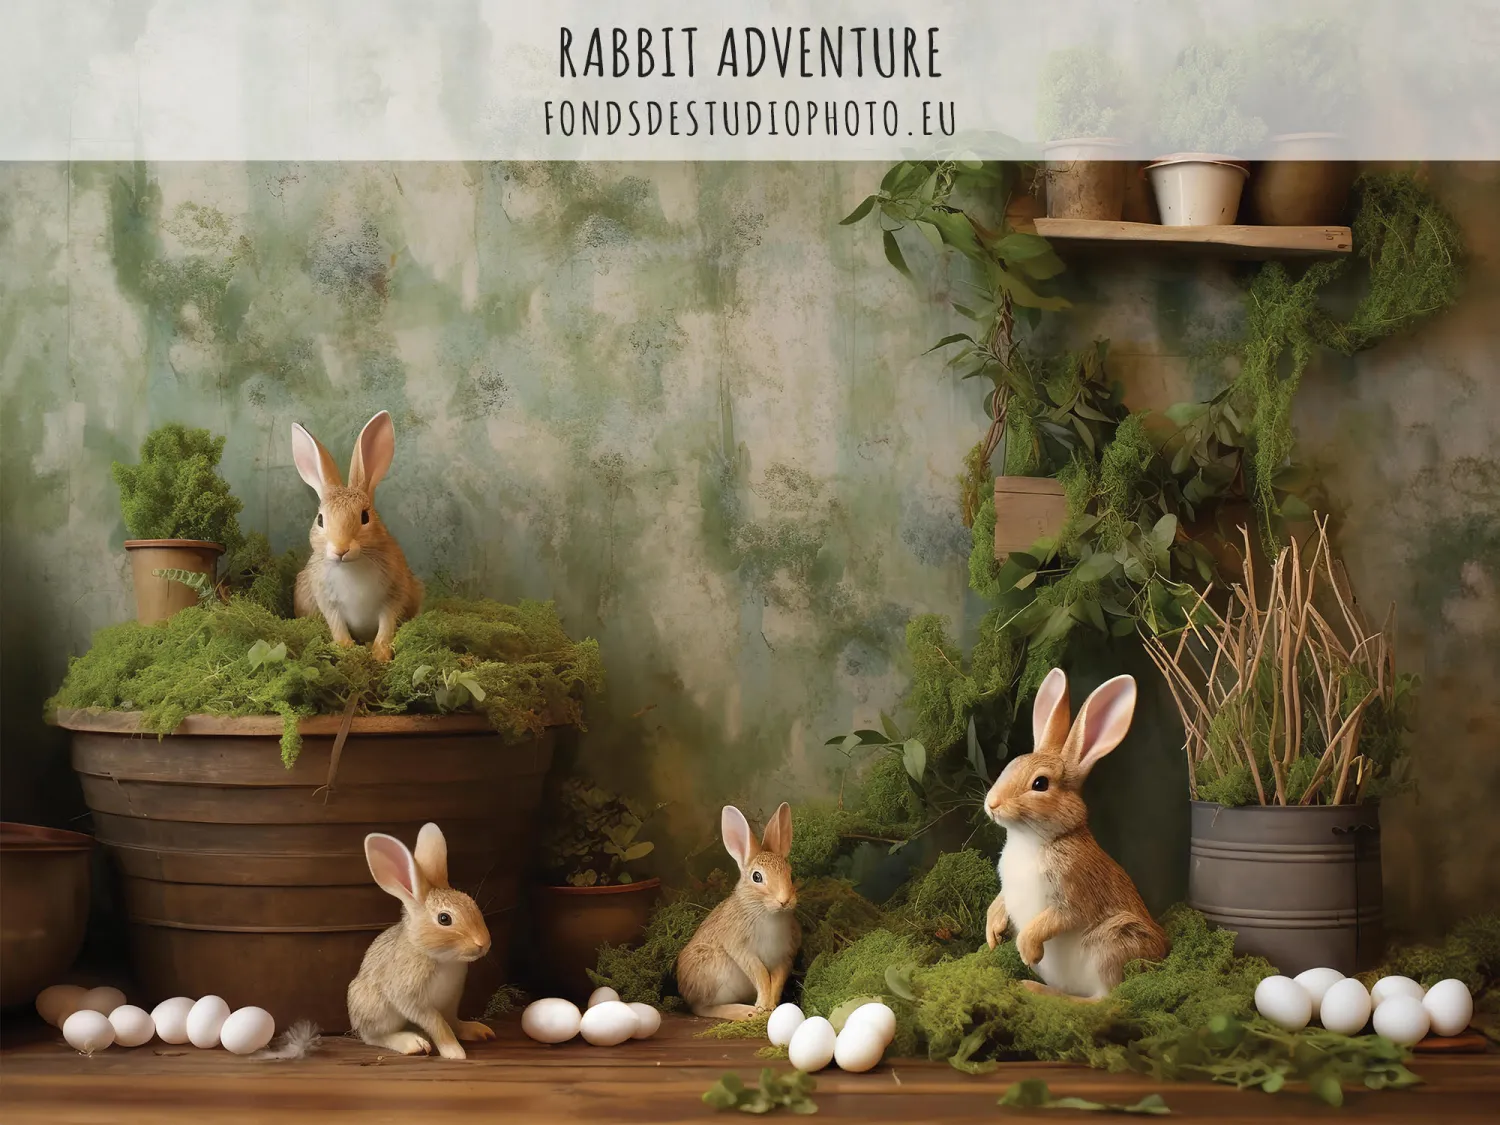 Rabbit Adventure